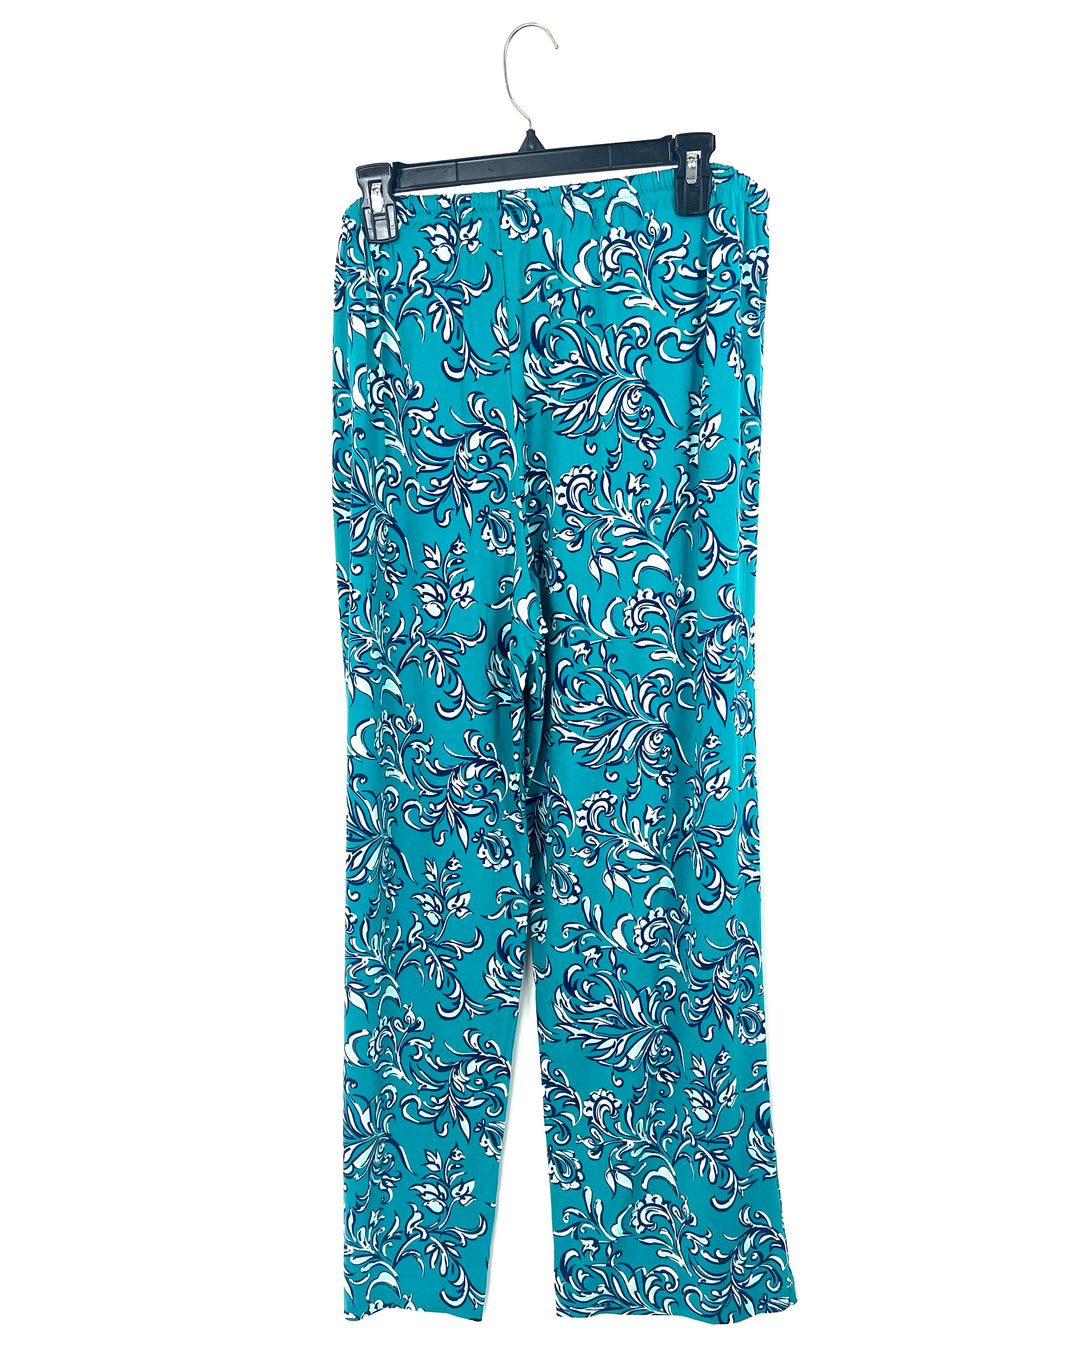 Teal Printed Pajama Pants - 1X